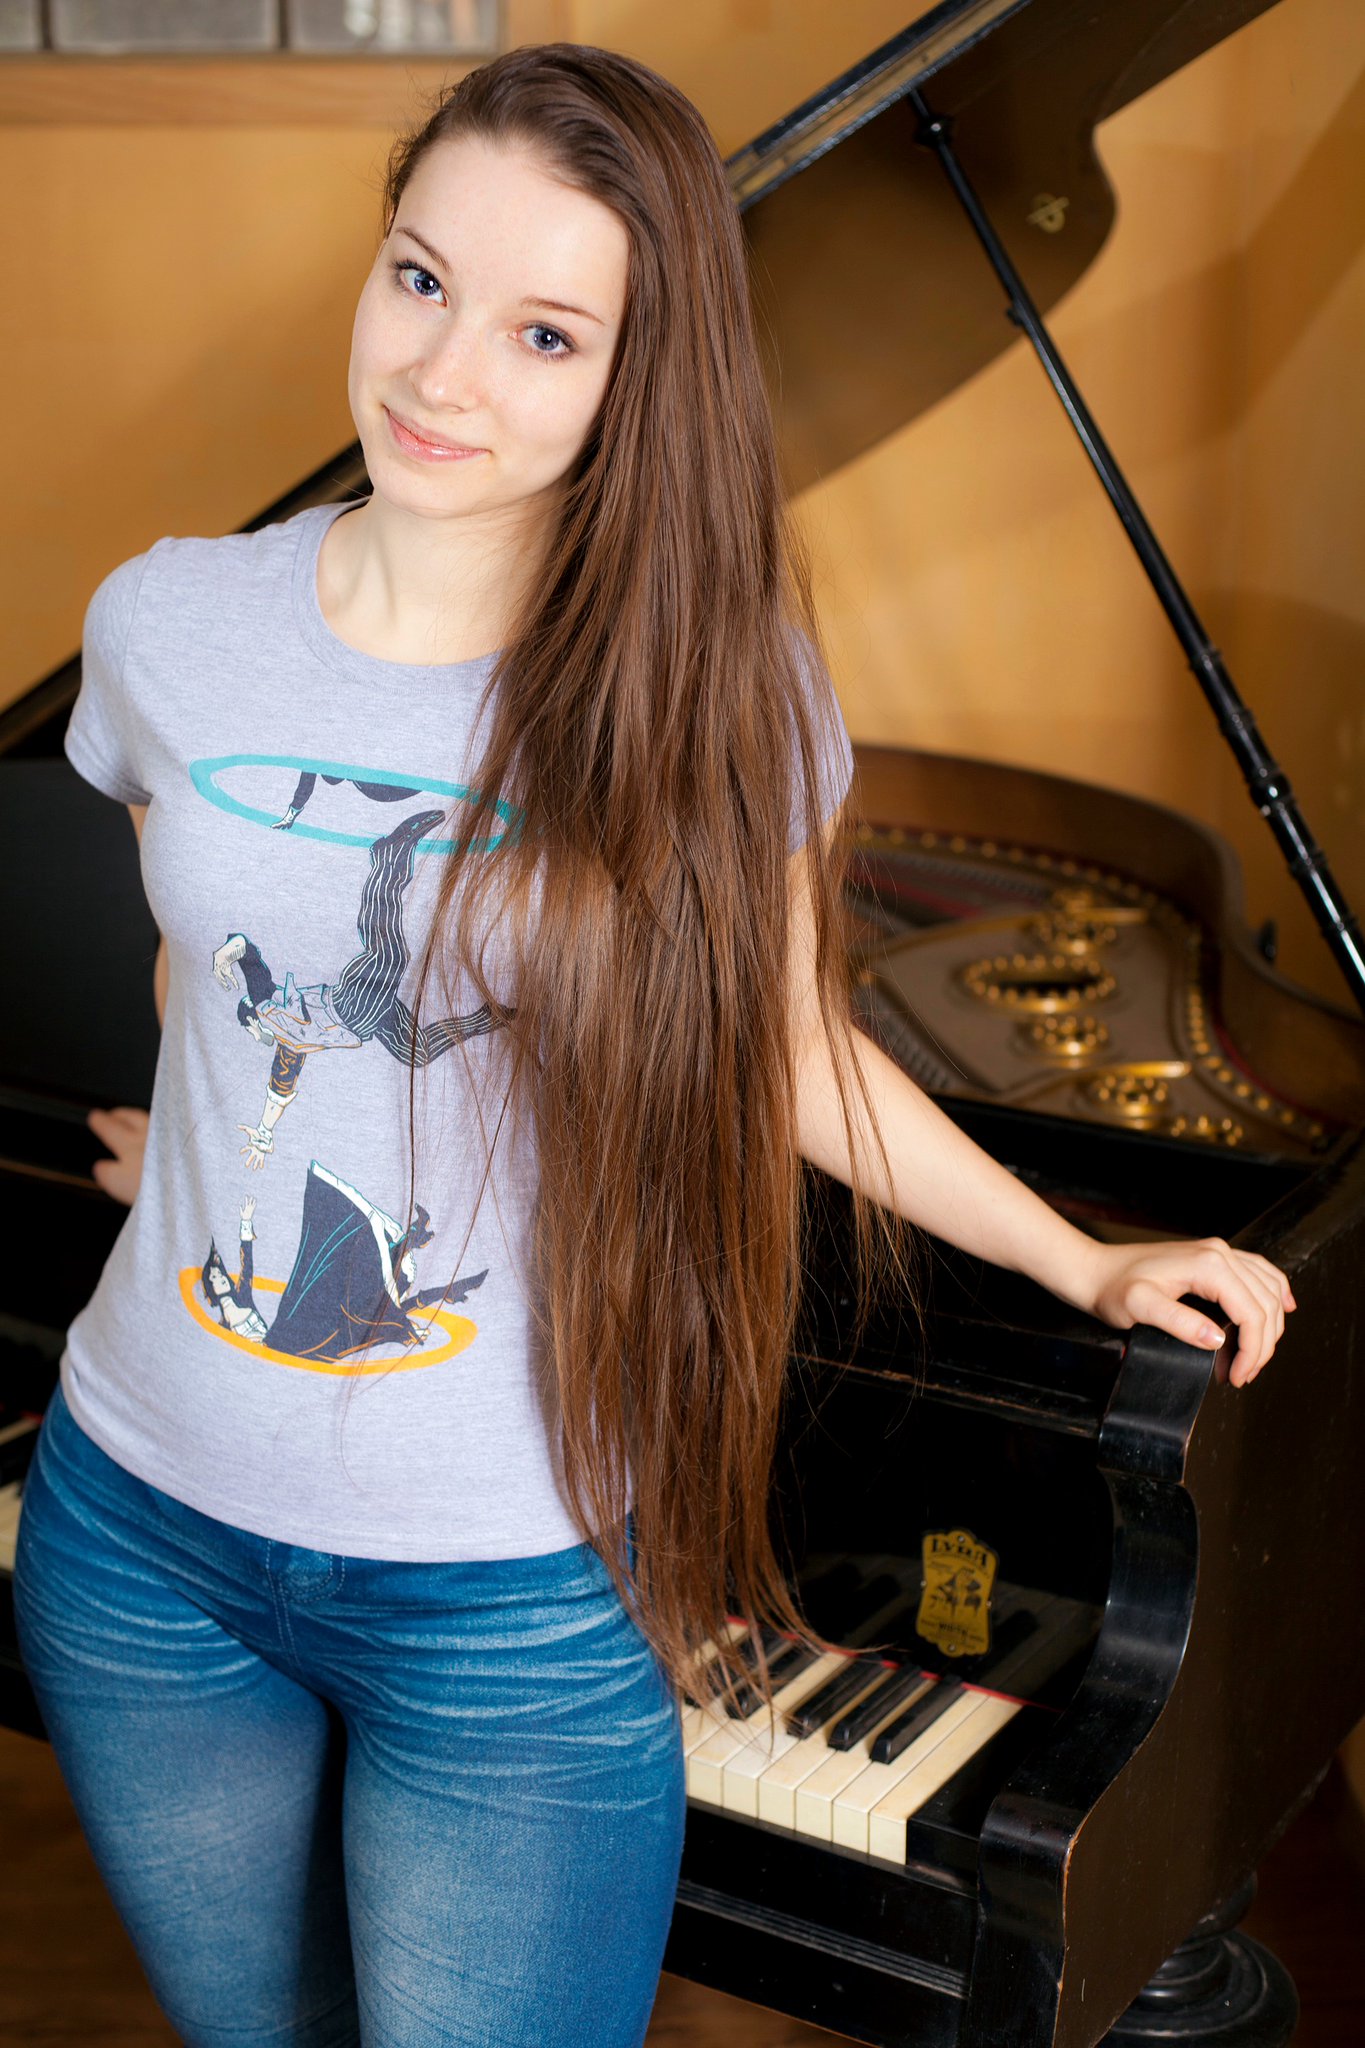 Enji Night Women Brunette Long Hair Looking At Viewer T Shirt Jeans Piano Women Indoors Portrait Dis 1365x2048